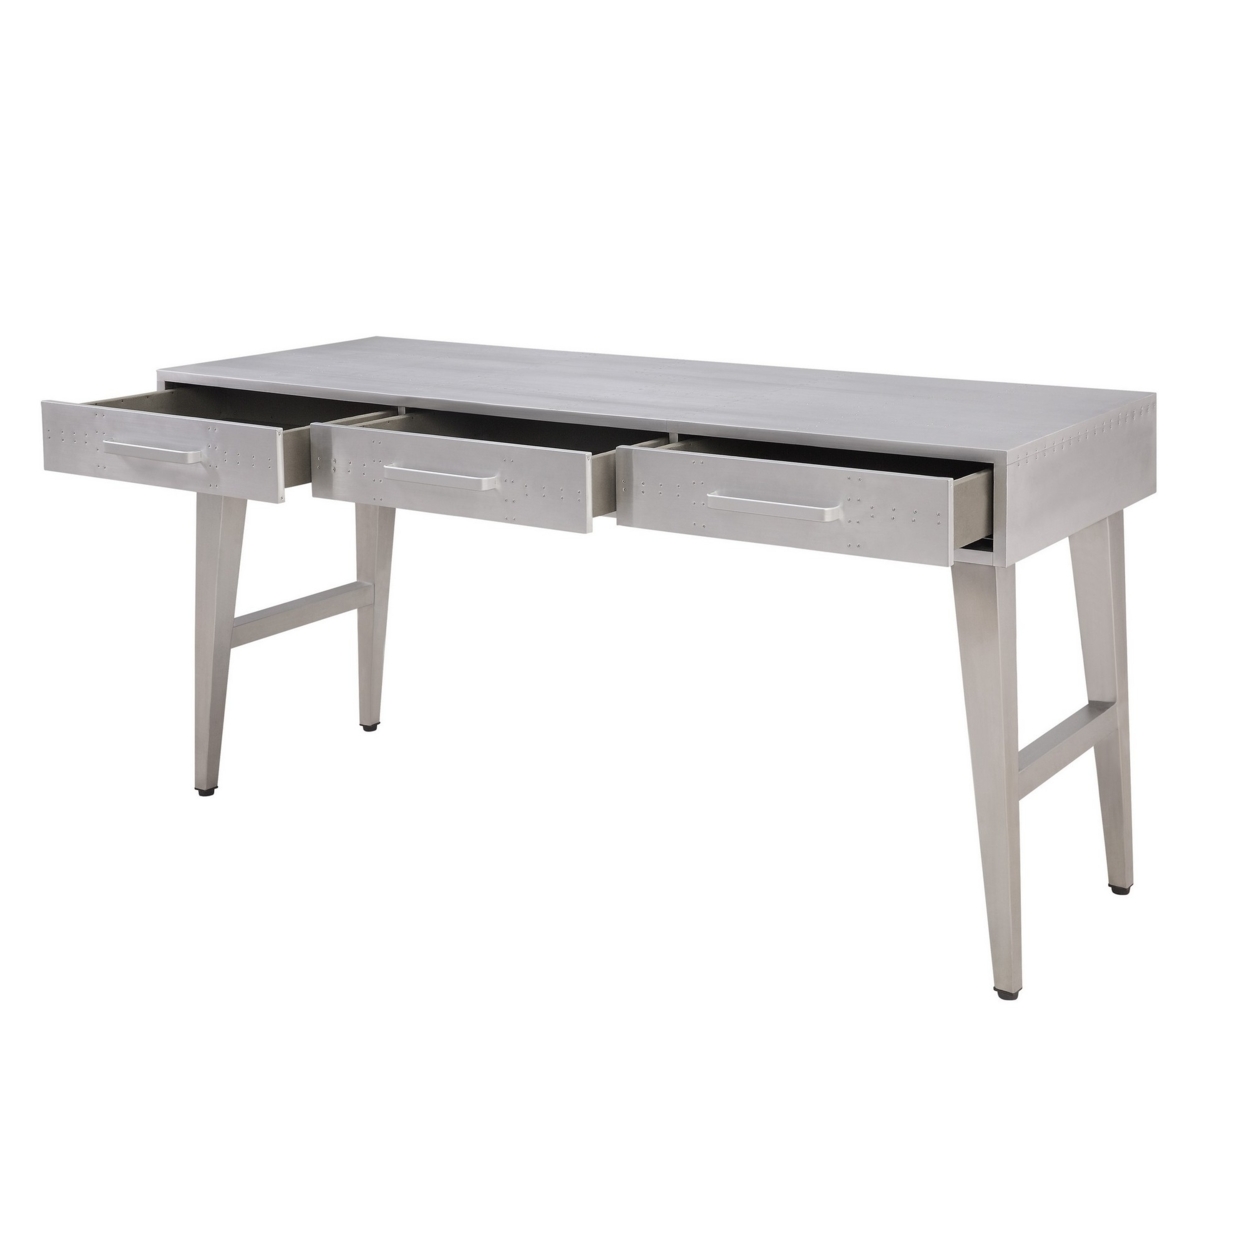 3 Drawer Metal And Wood Rectangular Desk With Aluminum Patchwork, Silver- Saltoro Sherpi